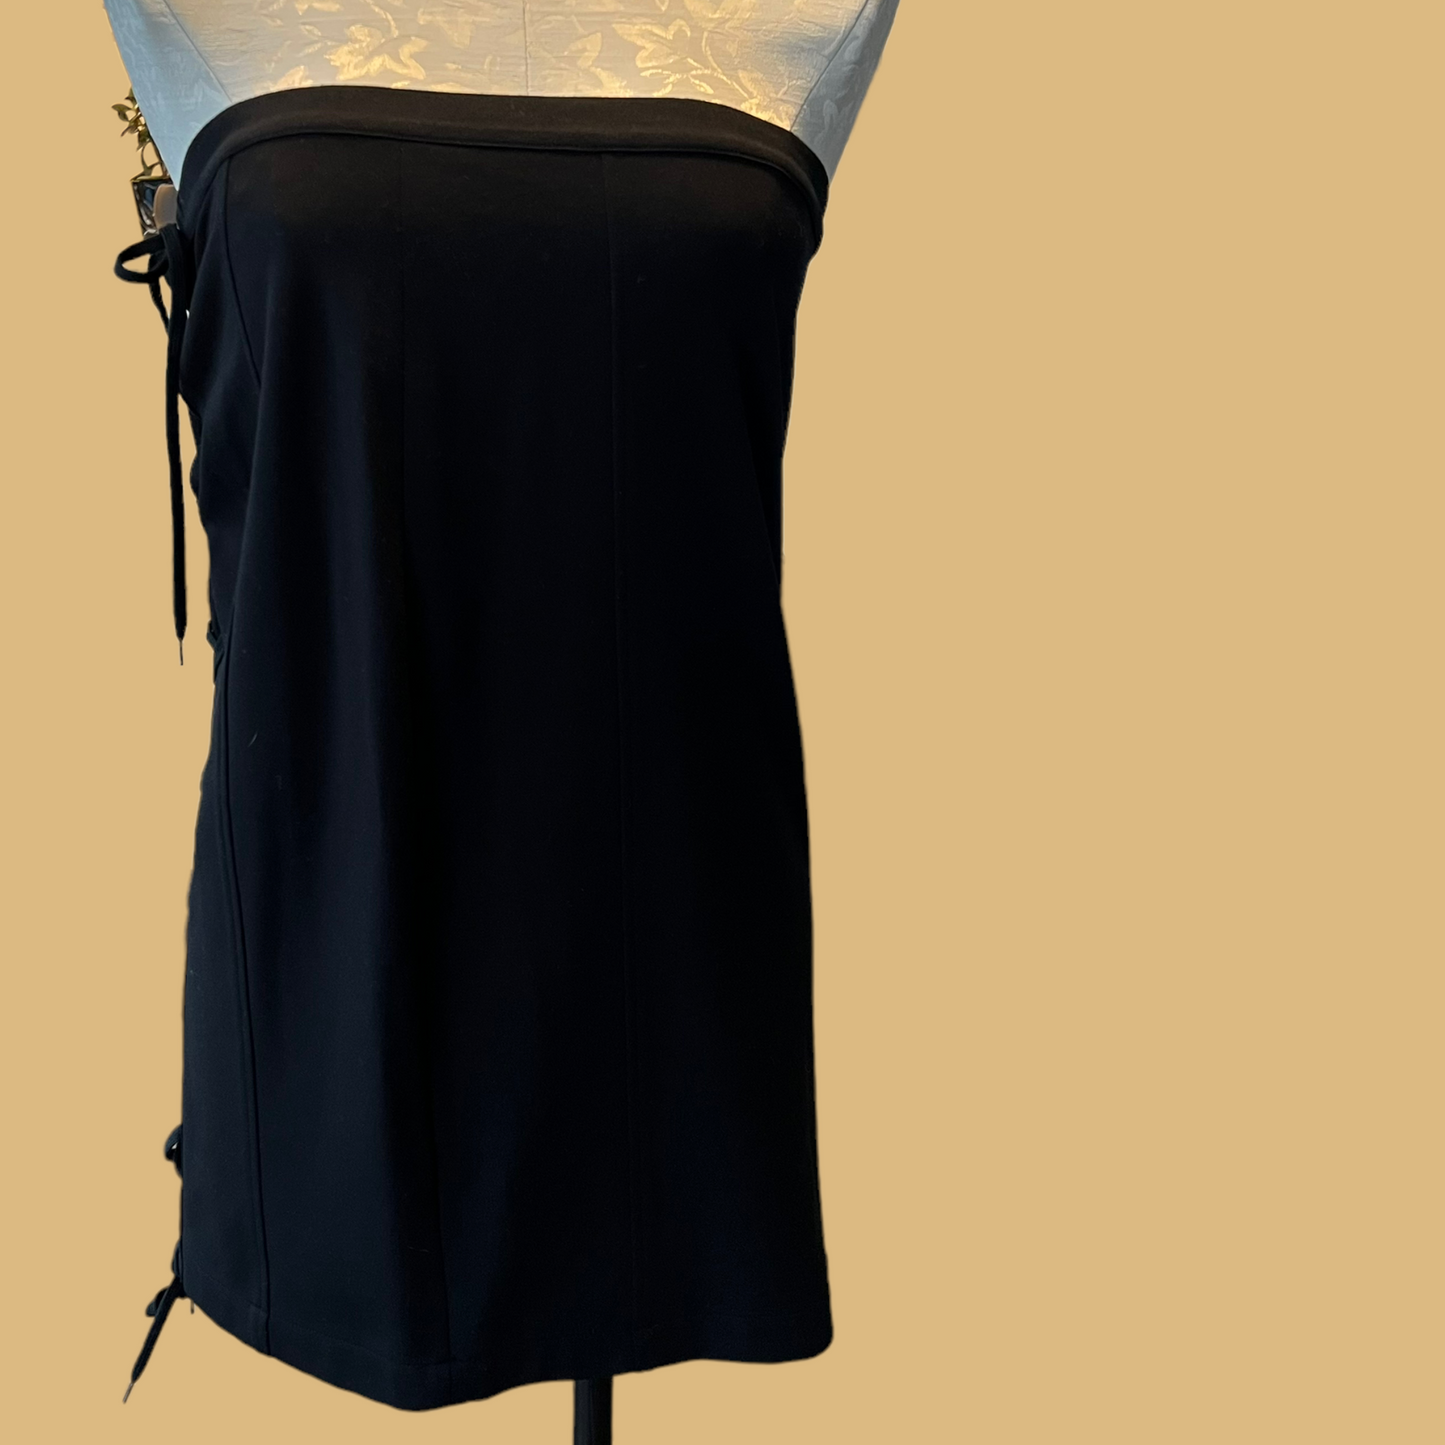 Jean Paul Gaultier black skirt size large